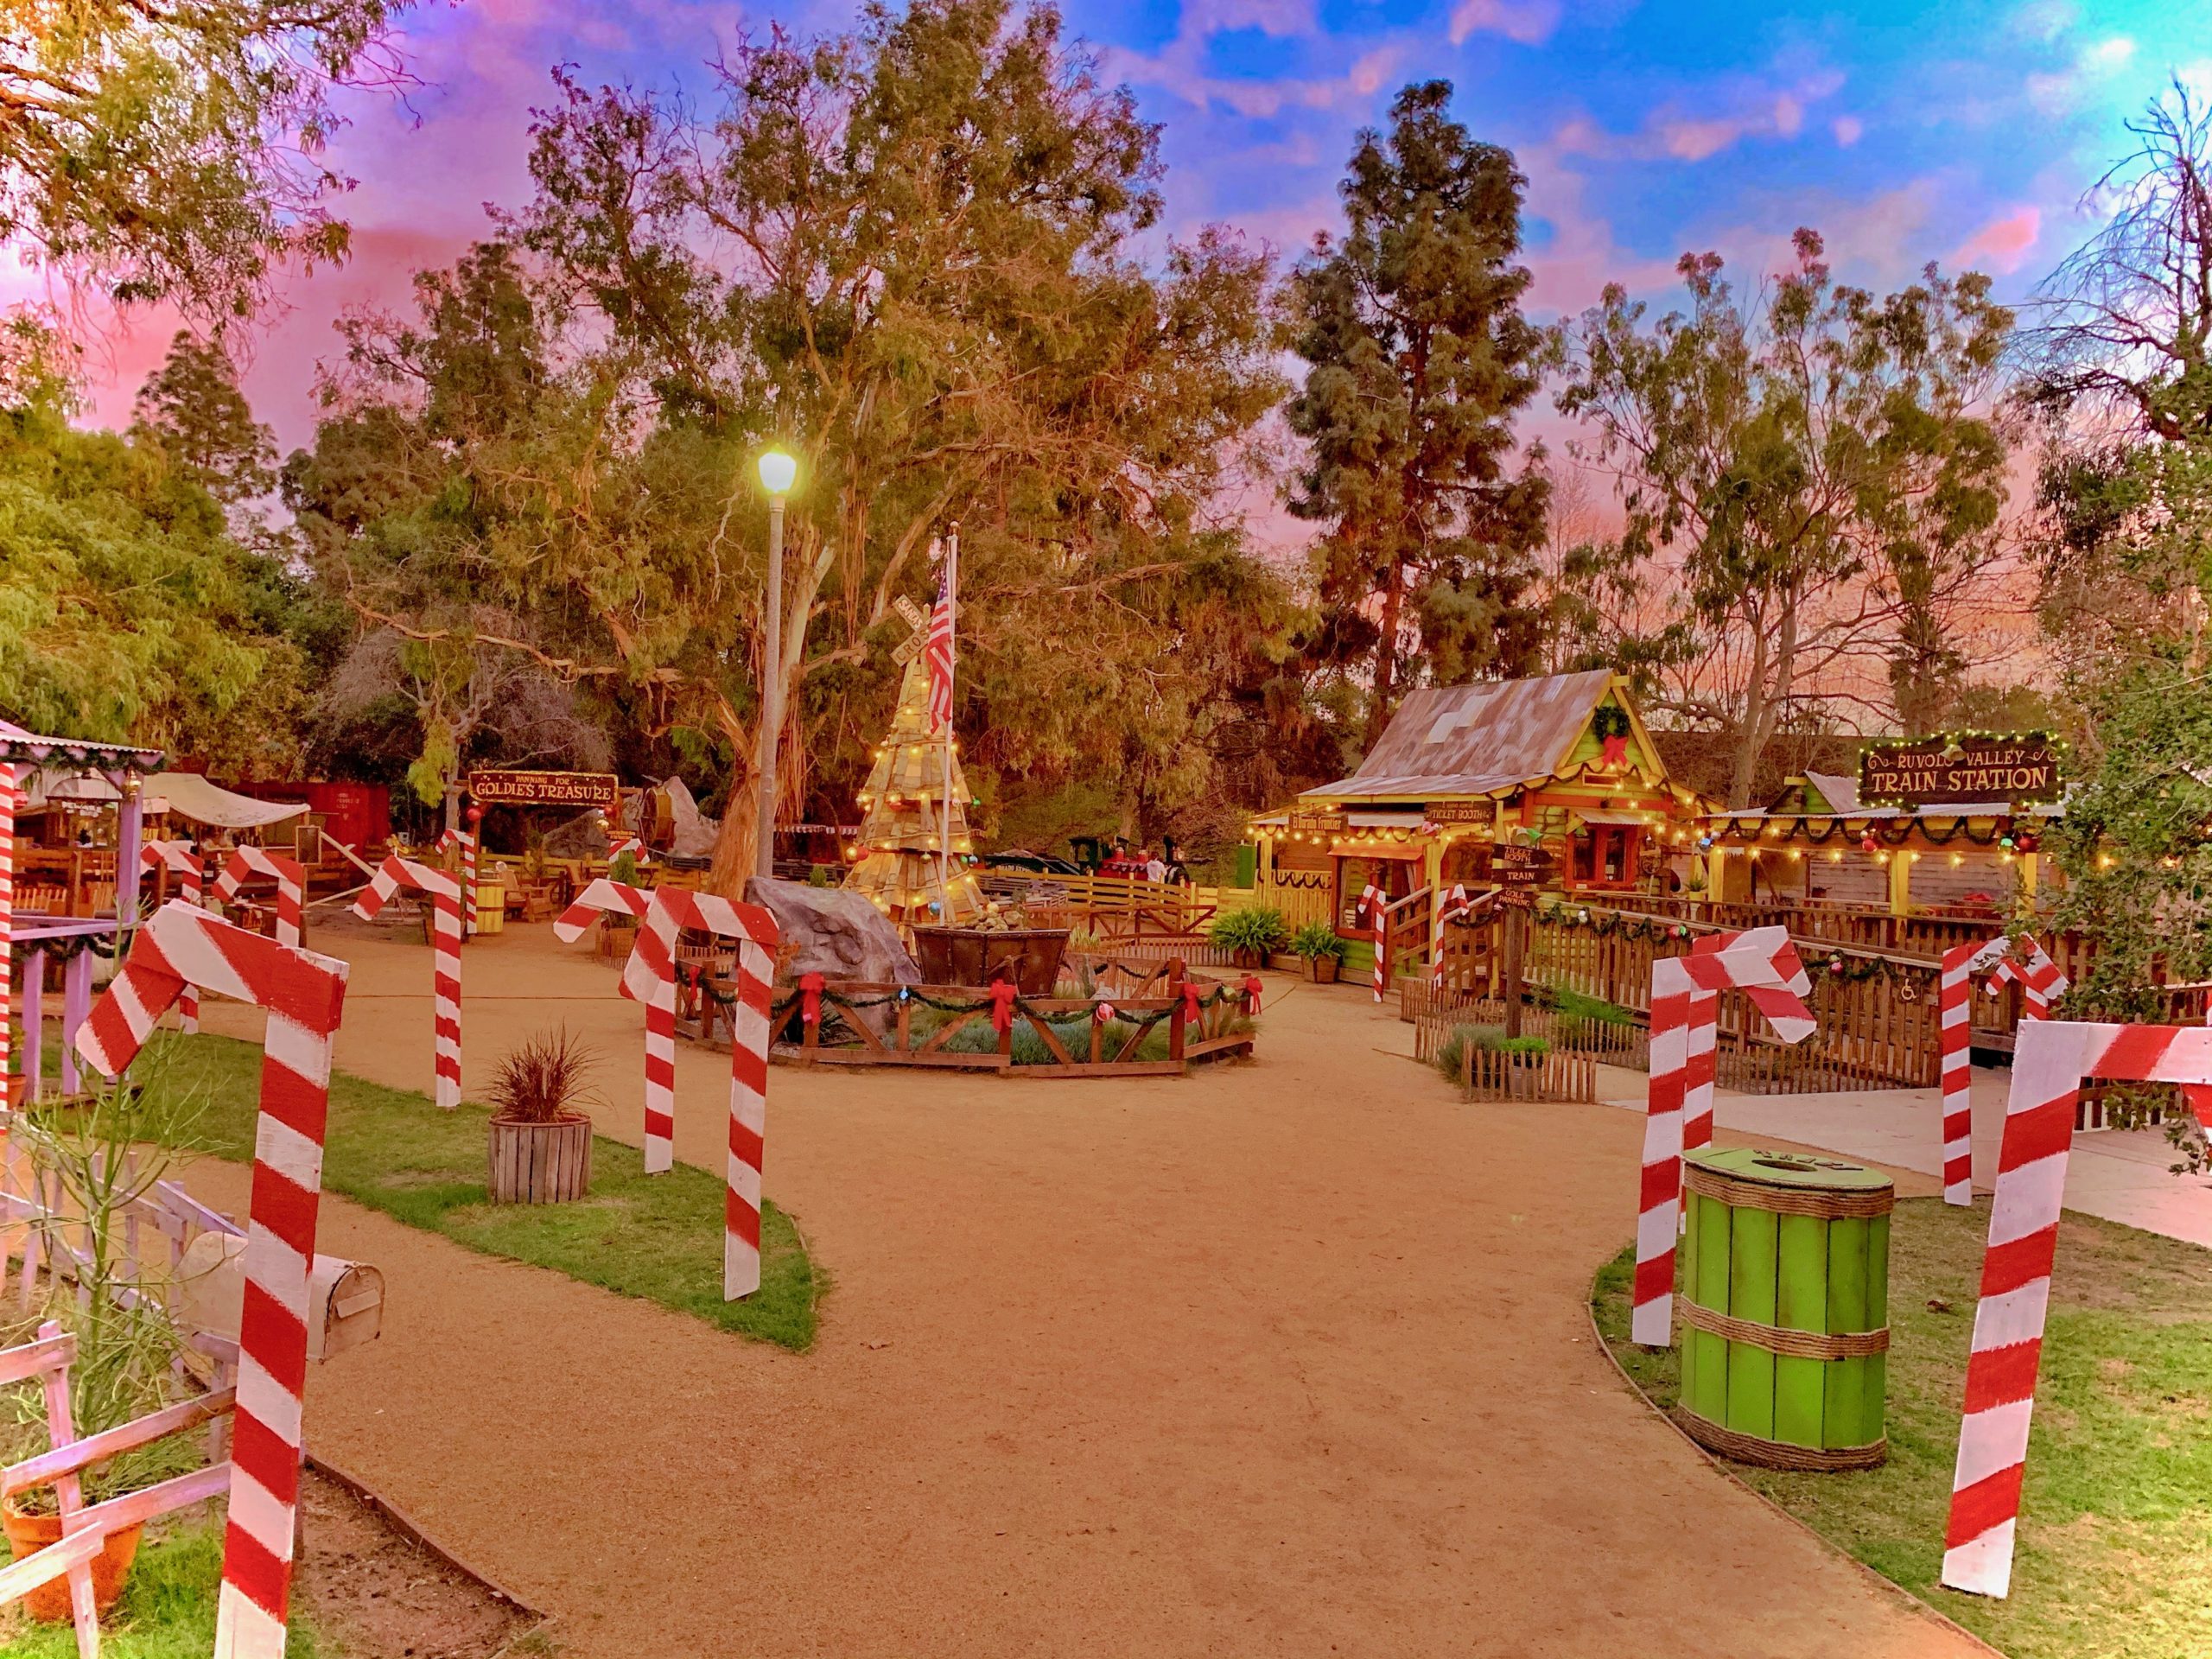 El Dorado Park Frontier Carousel & Christmas Tree Lighting